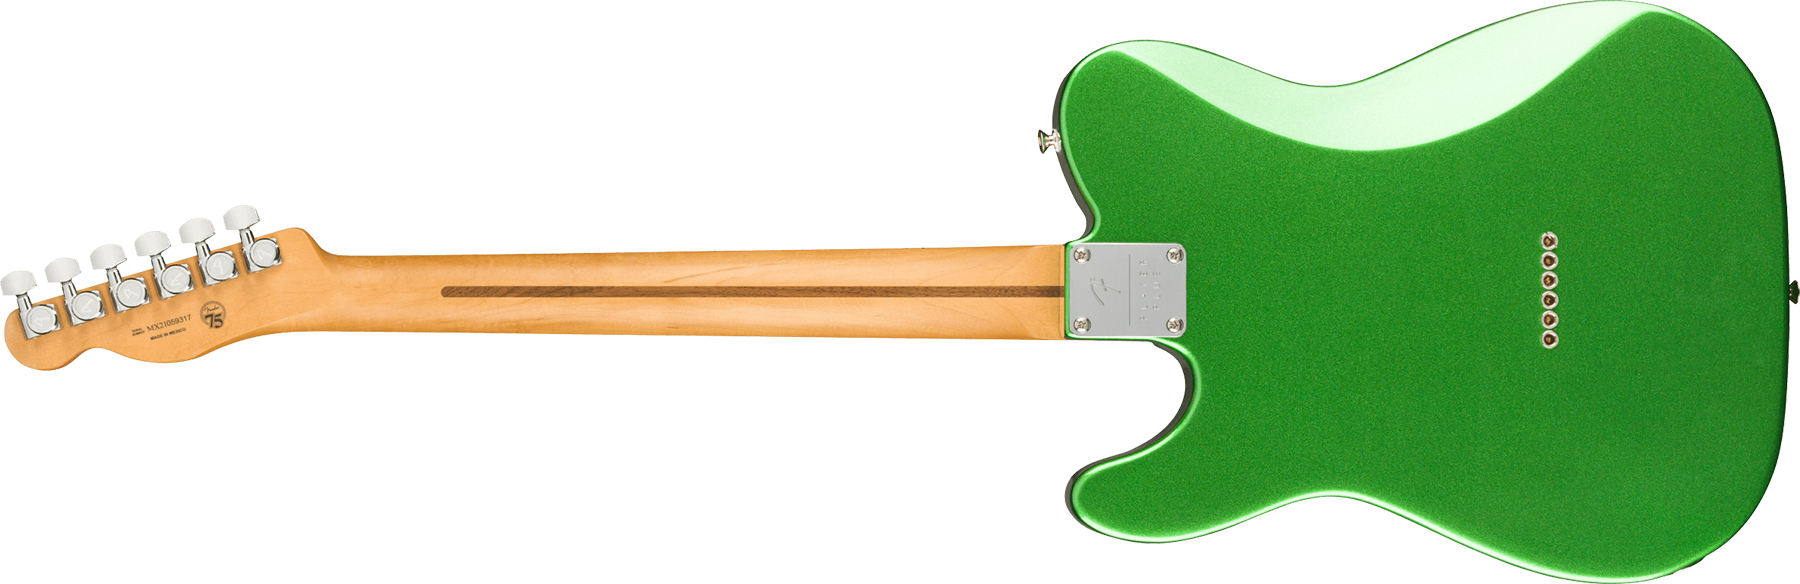 Fender Tele Player Plus Mex 2s Ht Mn - Cosmic Jade - Guitarra eléctrica con forma de tel - Variation 1